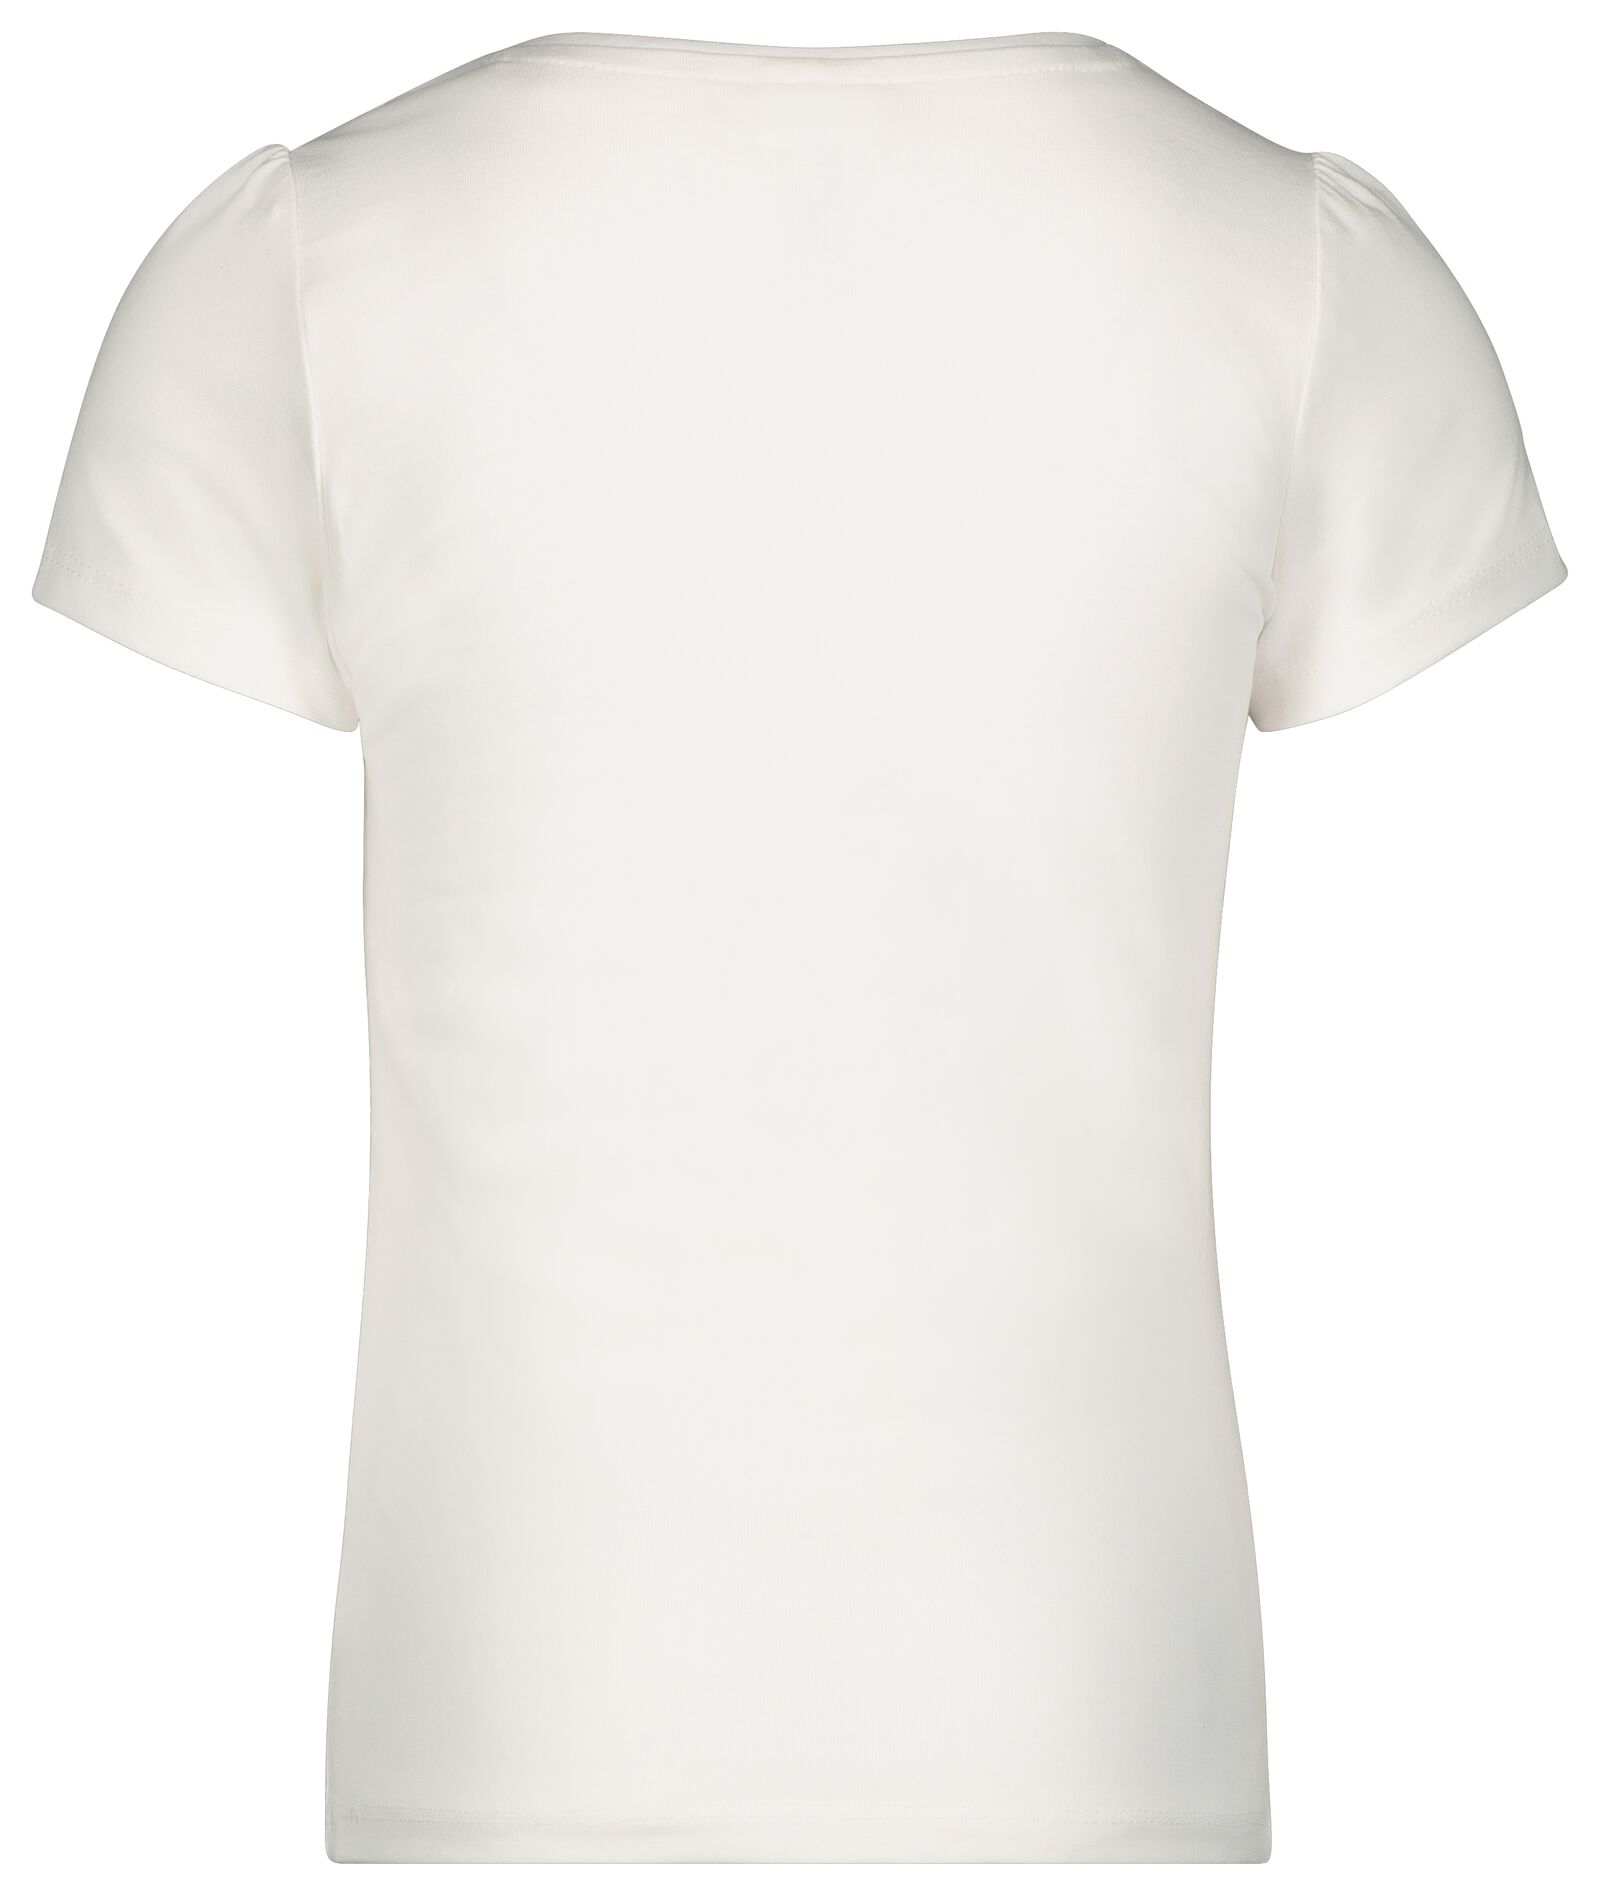 2 t-shirts enfant blanc 134/140 - 30843934 - HEMA